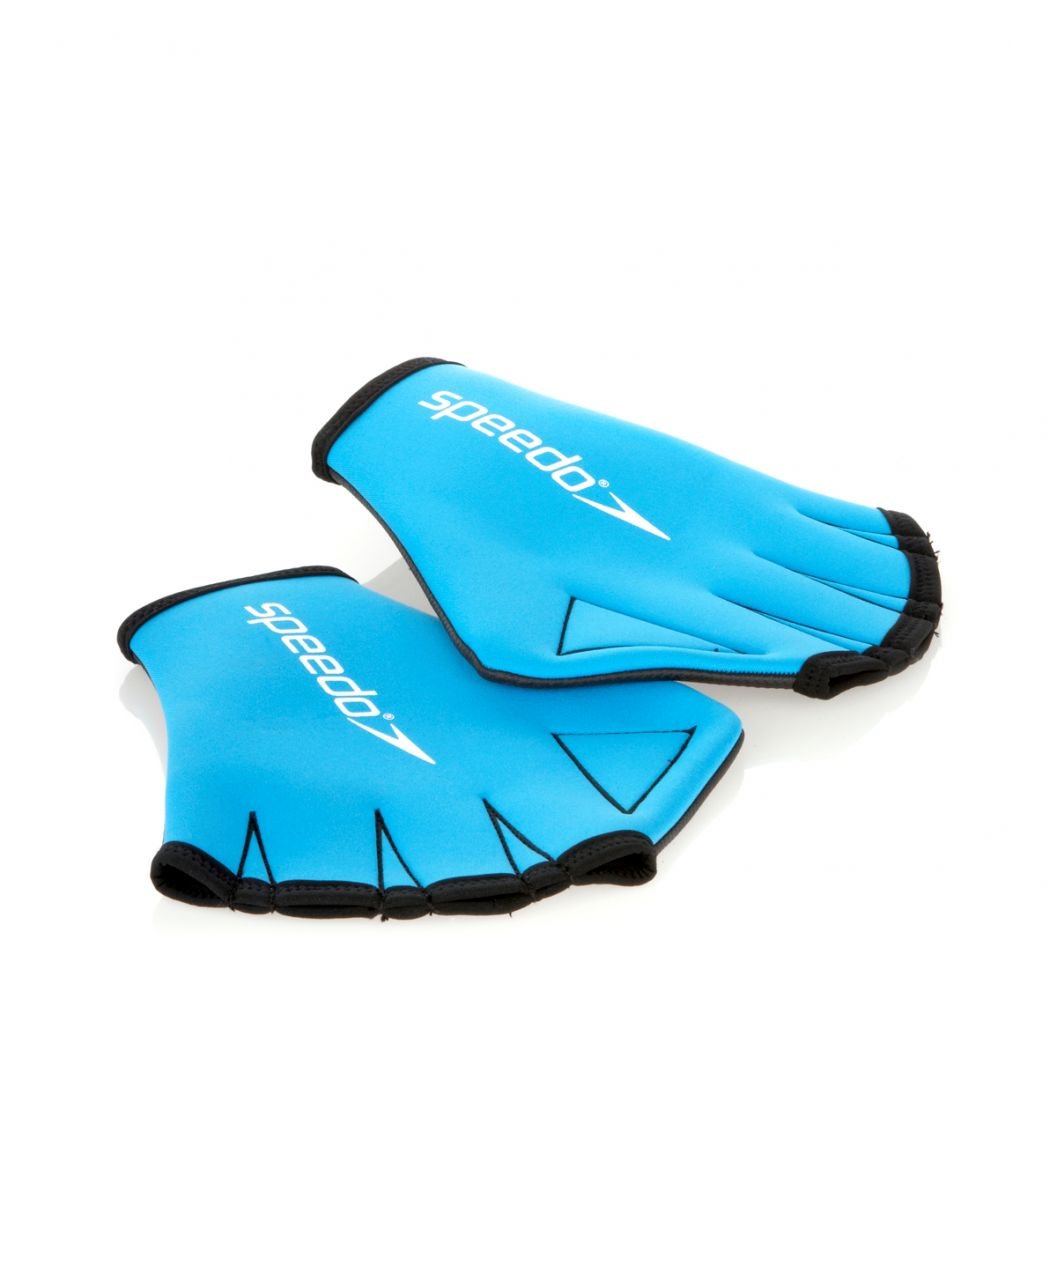 Speedo Aqua Glove Au Blue